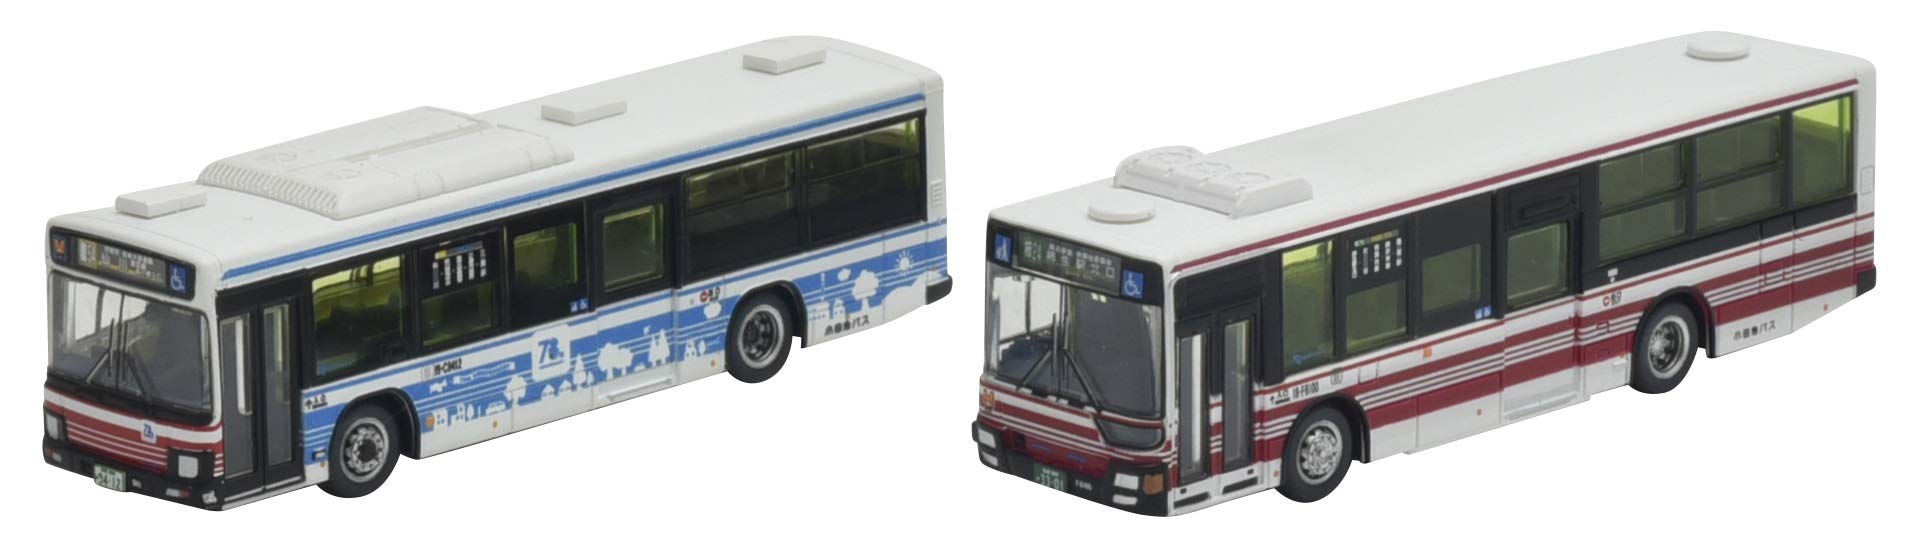 Tomytec 70th Anniversary Odakyu Bus Collection Set of 2 Diorama Supplies Limited Edition